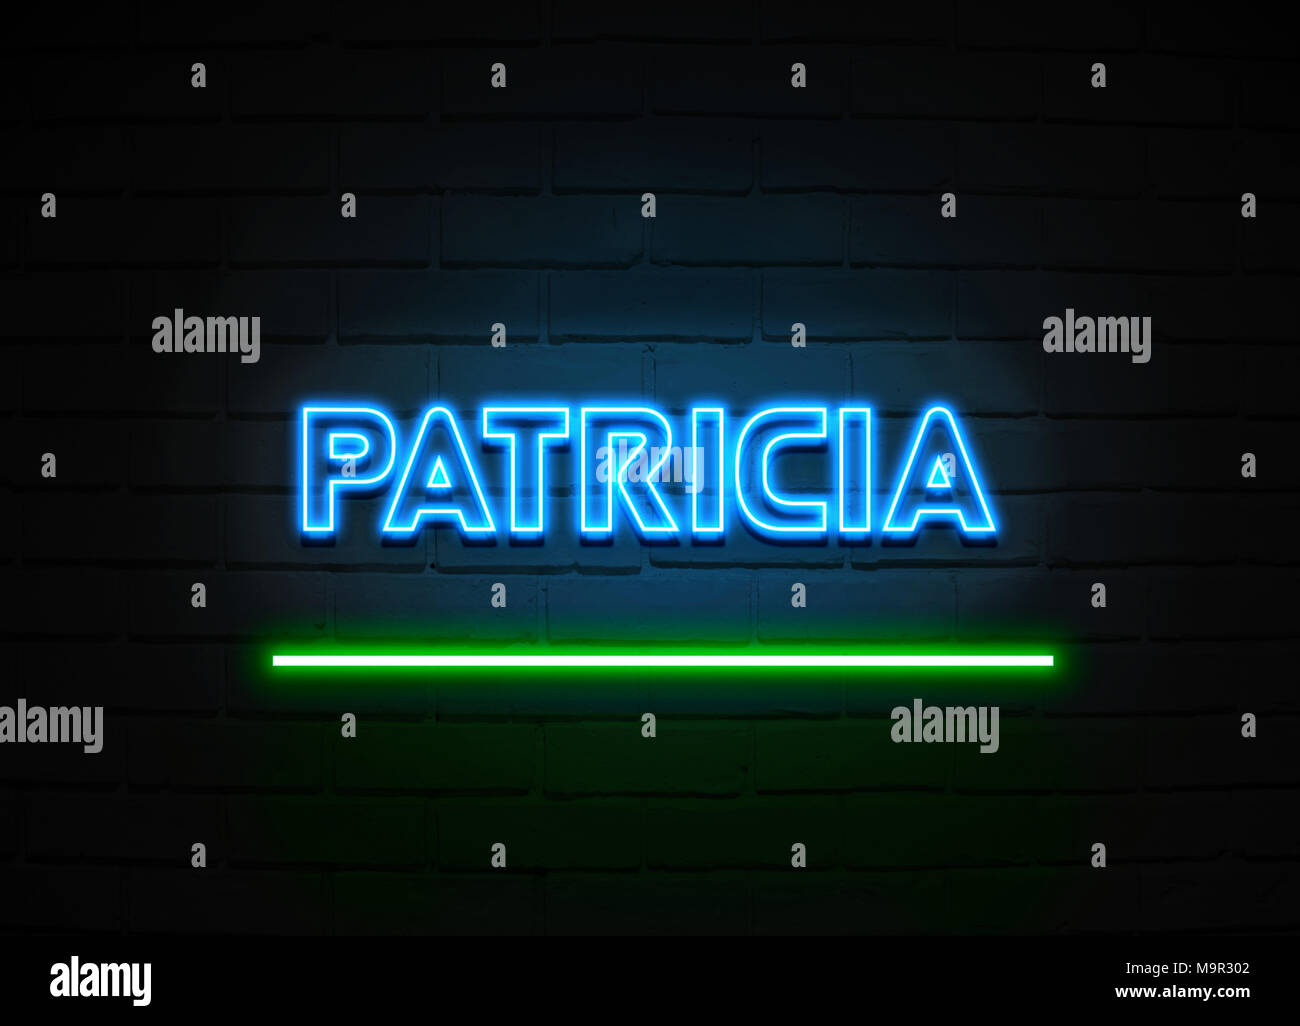 Patricia Leuchtreklame - glühende Leuchtreklame auf brickwall Wand - 3D-Royalty Free Stock Illustration dargestellt. Stockfoto